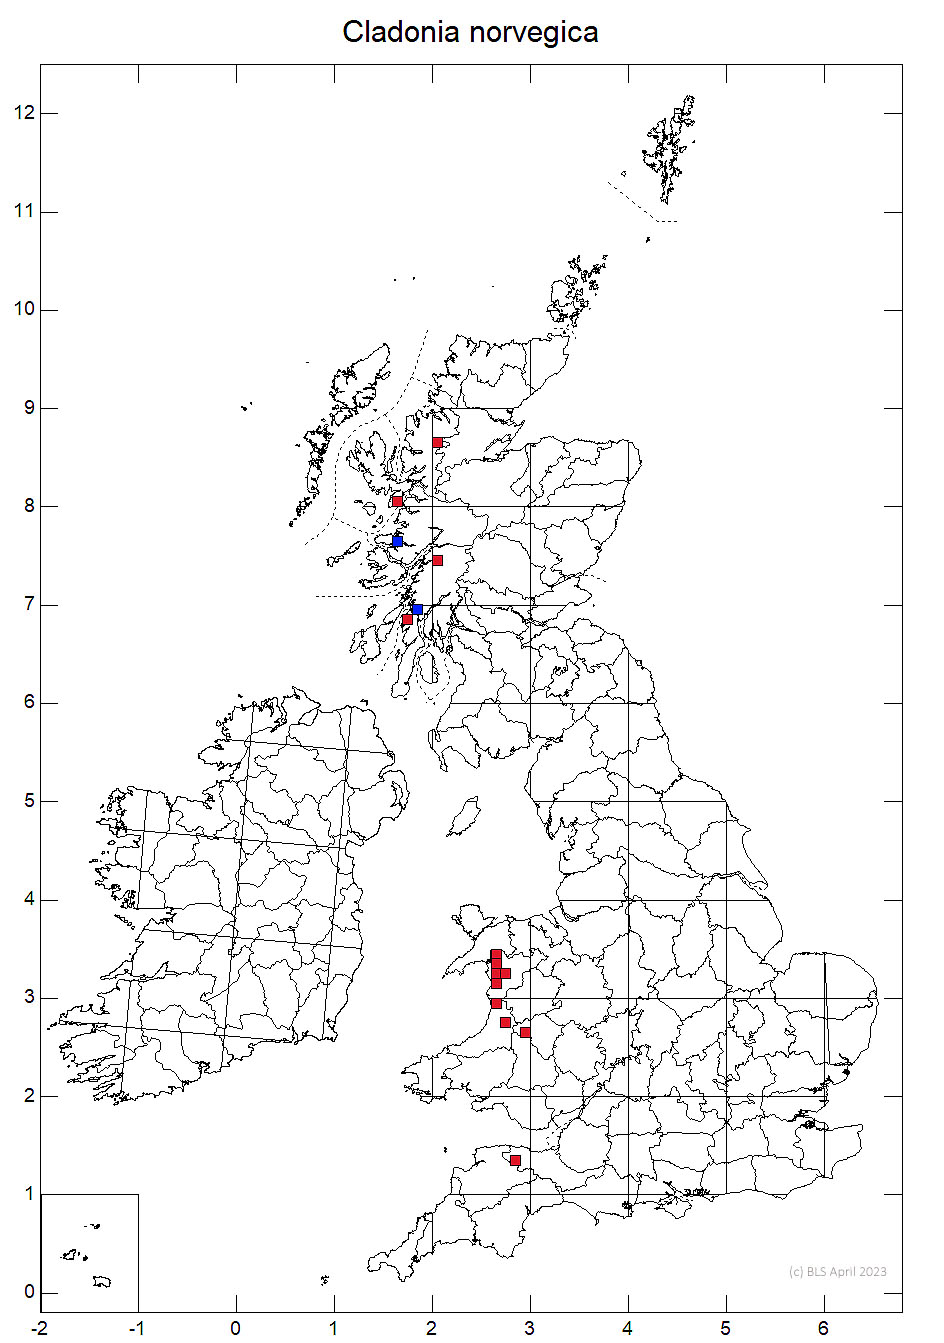 Cladonia norvegica 10km sq distribution map